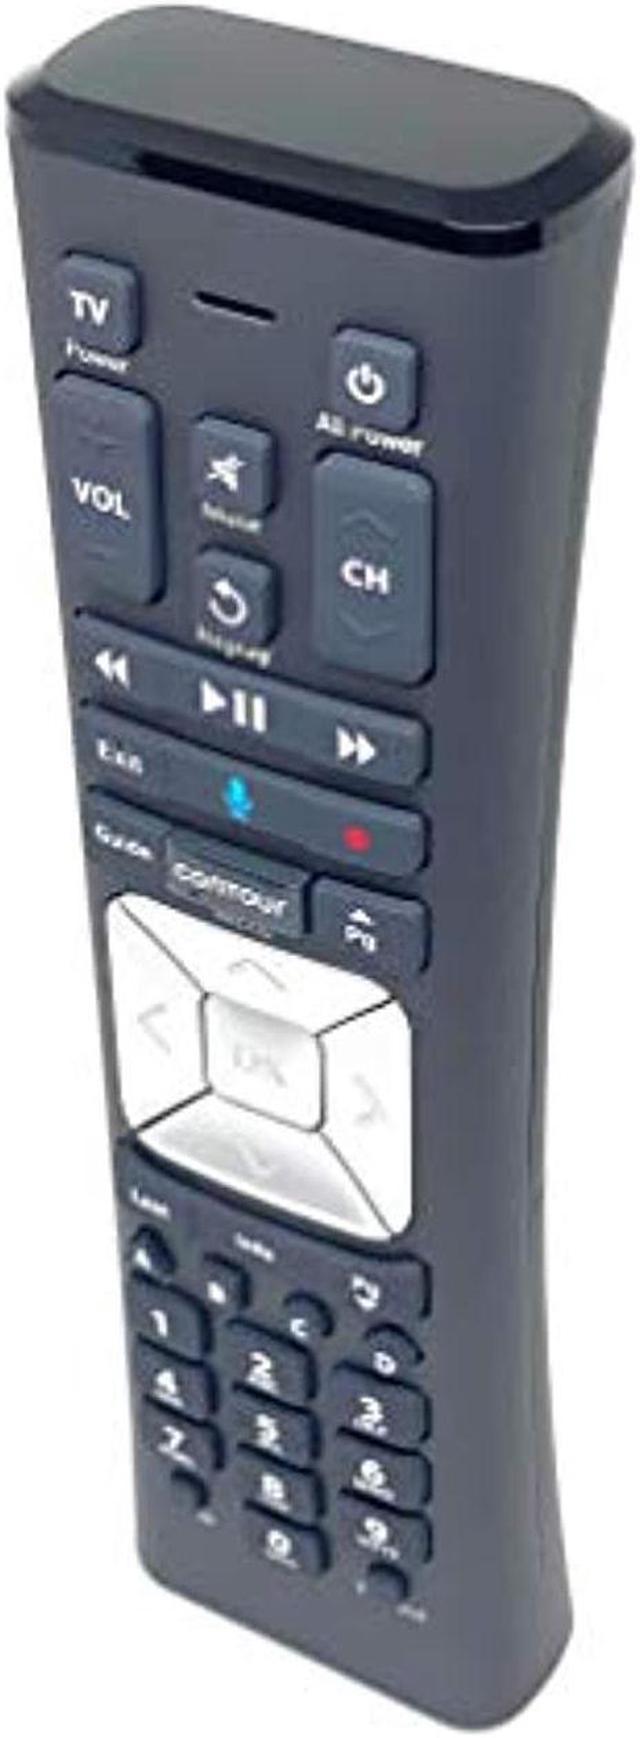 cox xr11 premium voice cable tv remote control ir & rf | aim anywhere | backlit keypad | tv input control TV Accessories - Newegg.com